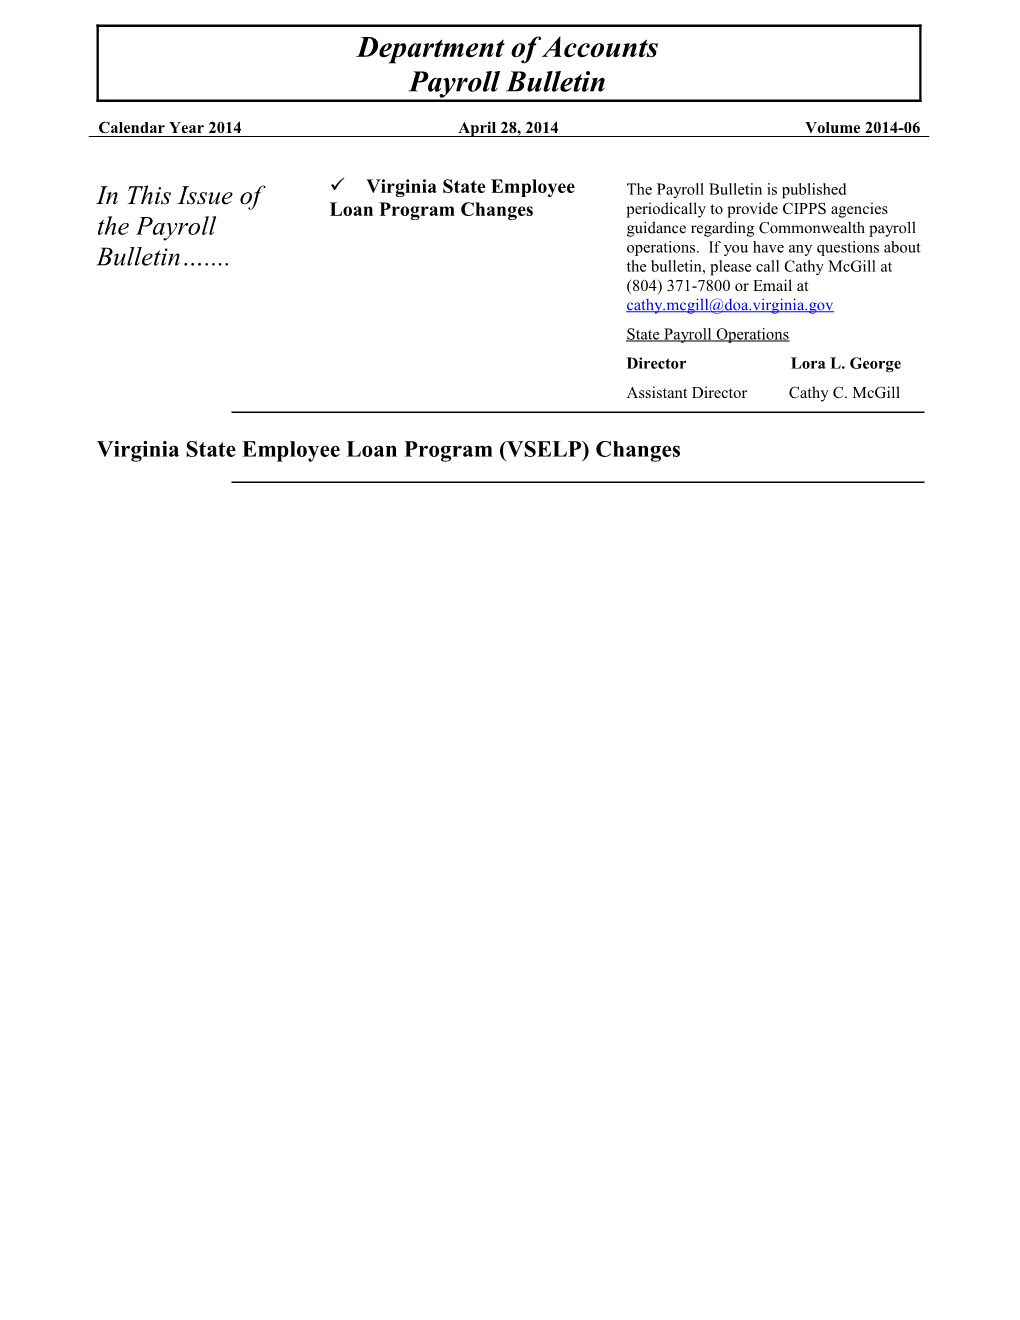 Virginia State Employee Loan Program (VSELP) Changes